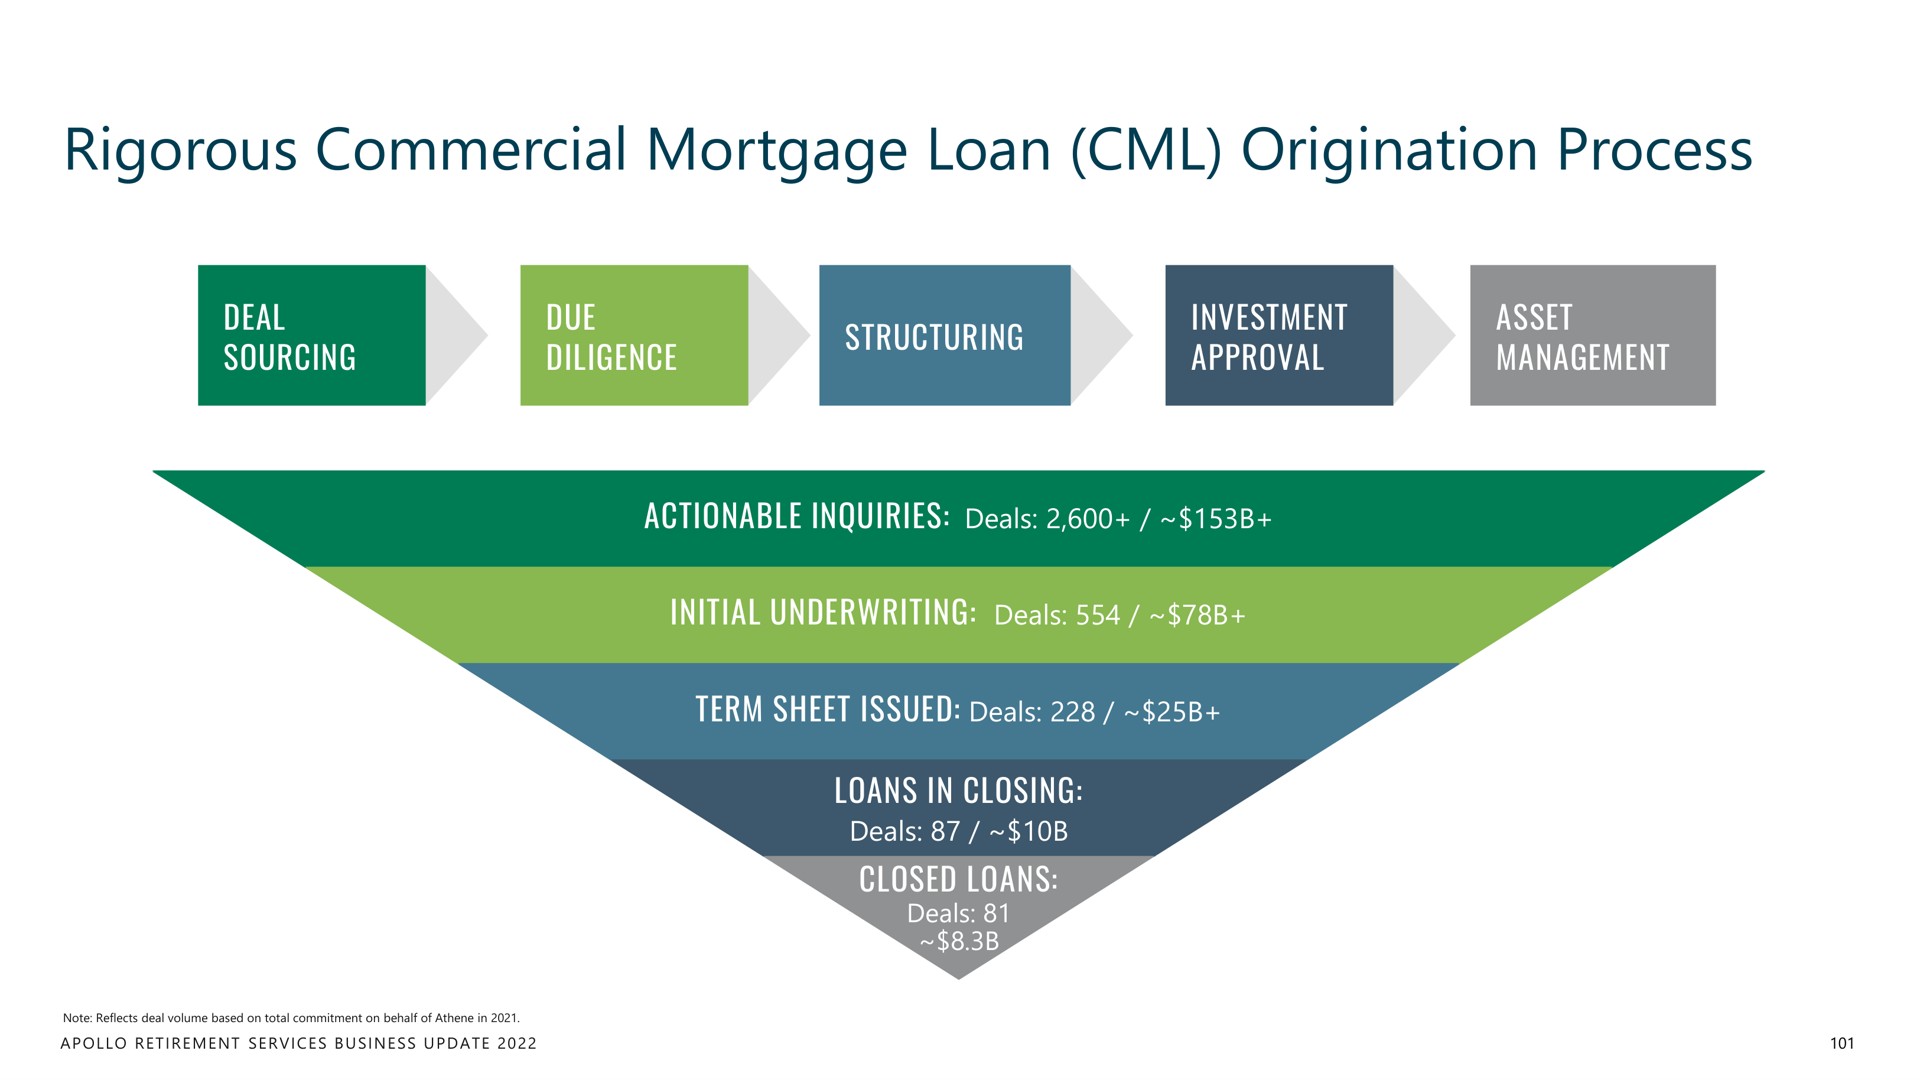 rigorous commercial mortgage loan origination process | Apollo Global Management